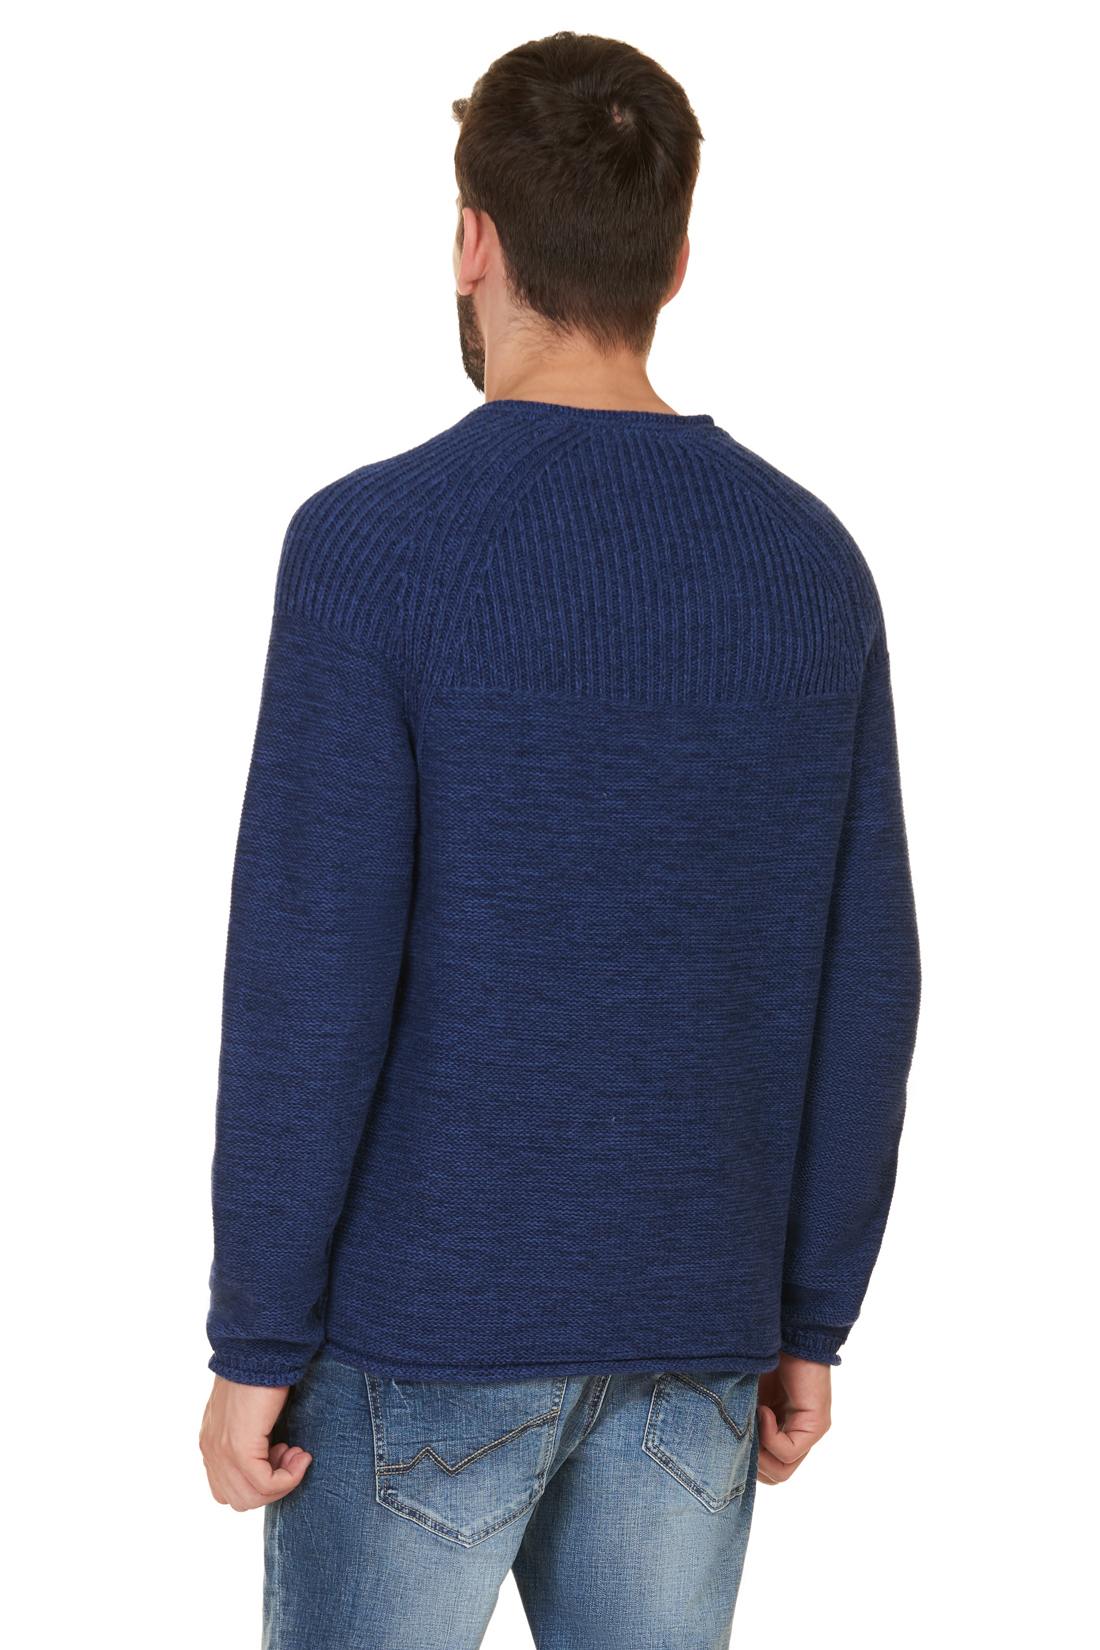 Пуловер из хлопка (арт. baon B637520), размер XXL, цвет deep navy melange#синий Пуловер из хлопка (арт. baon B637520) - фото 2